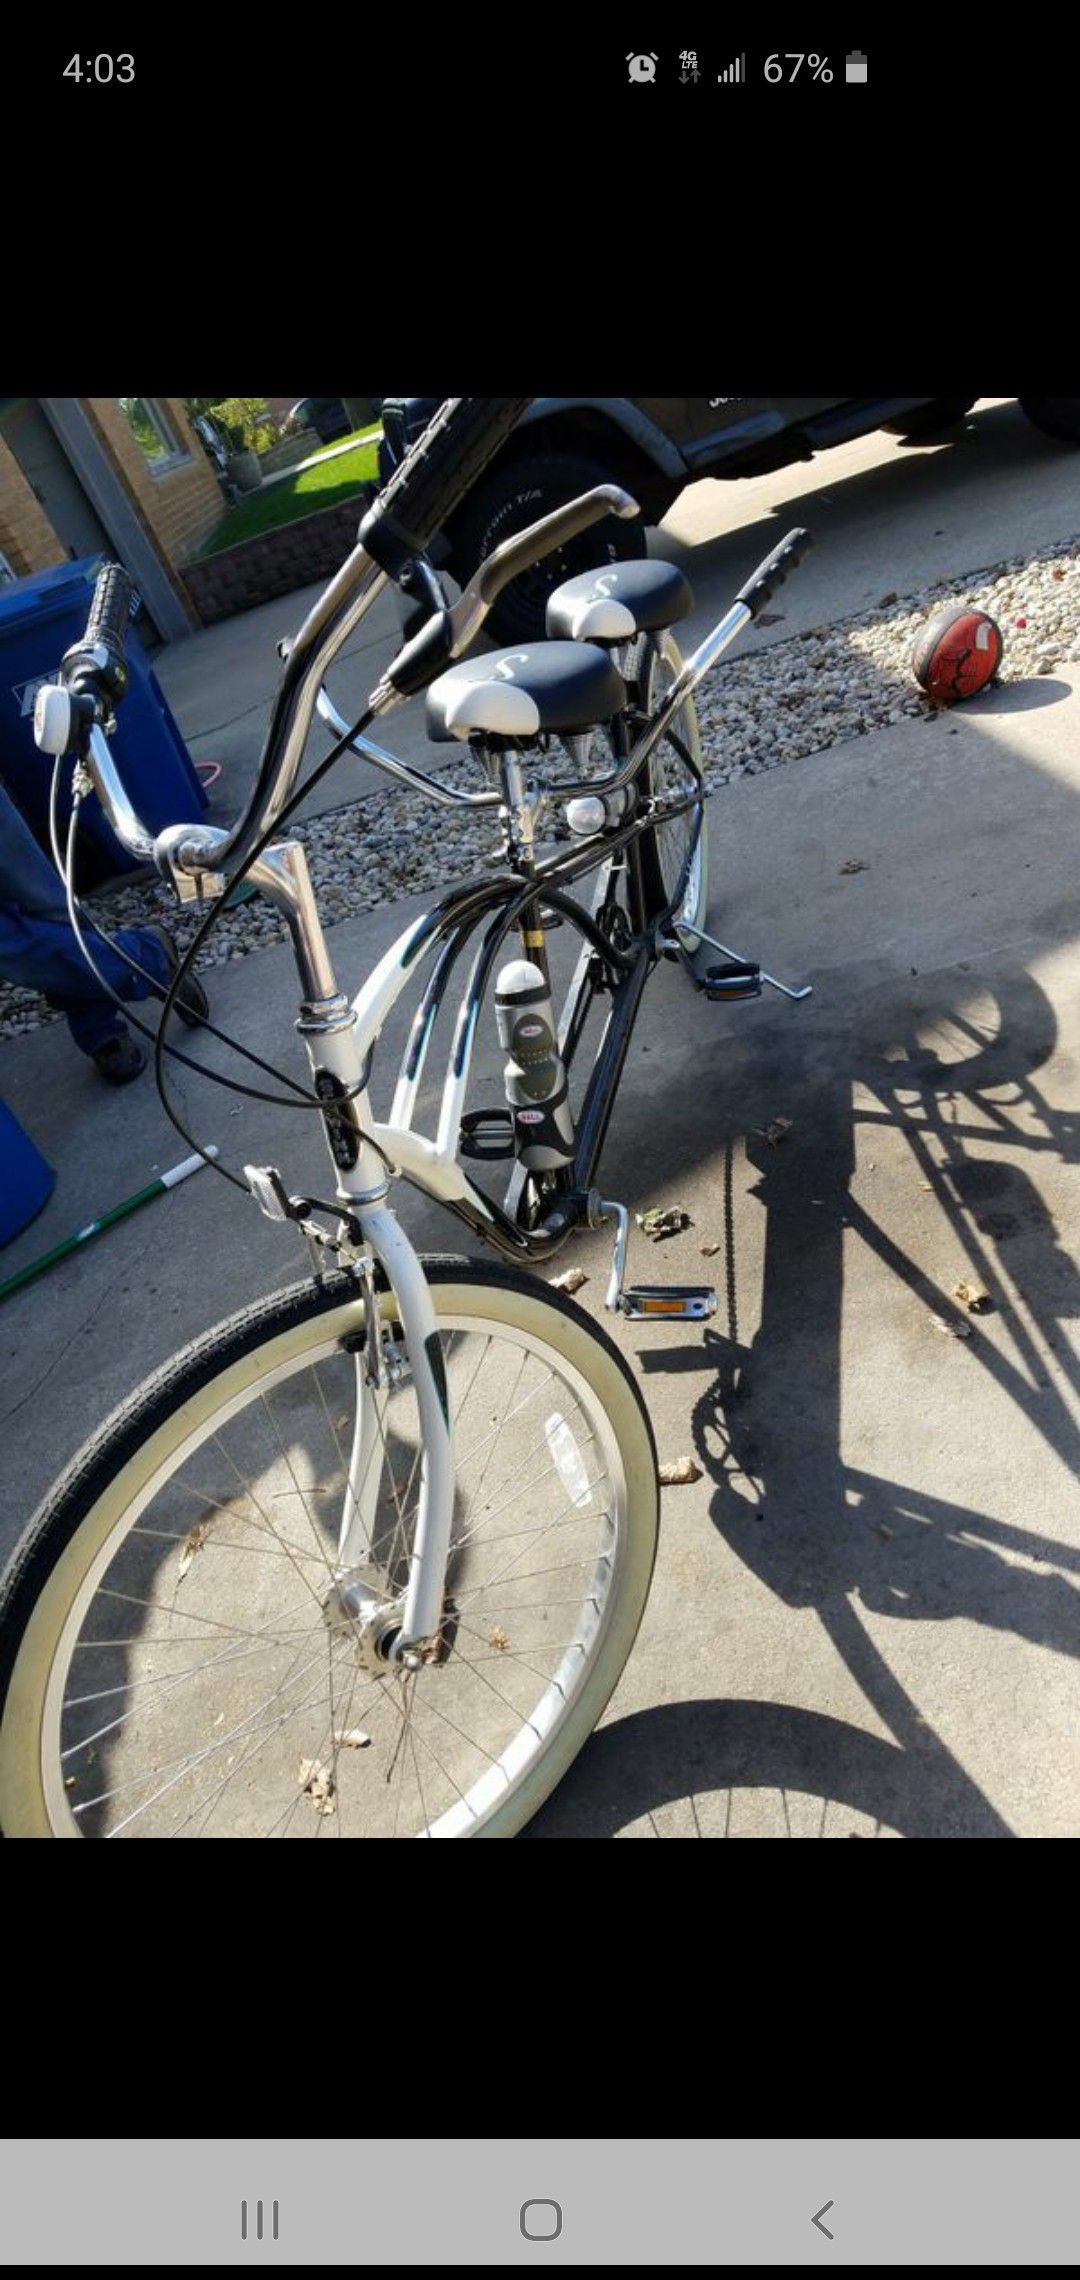 Shwinn double bike